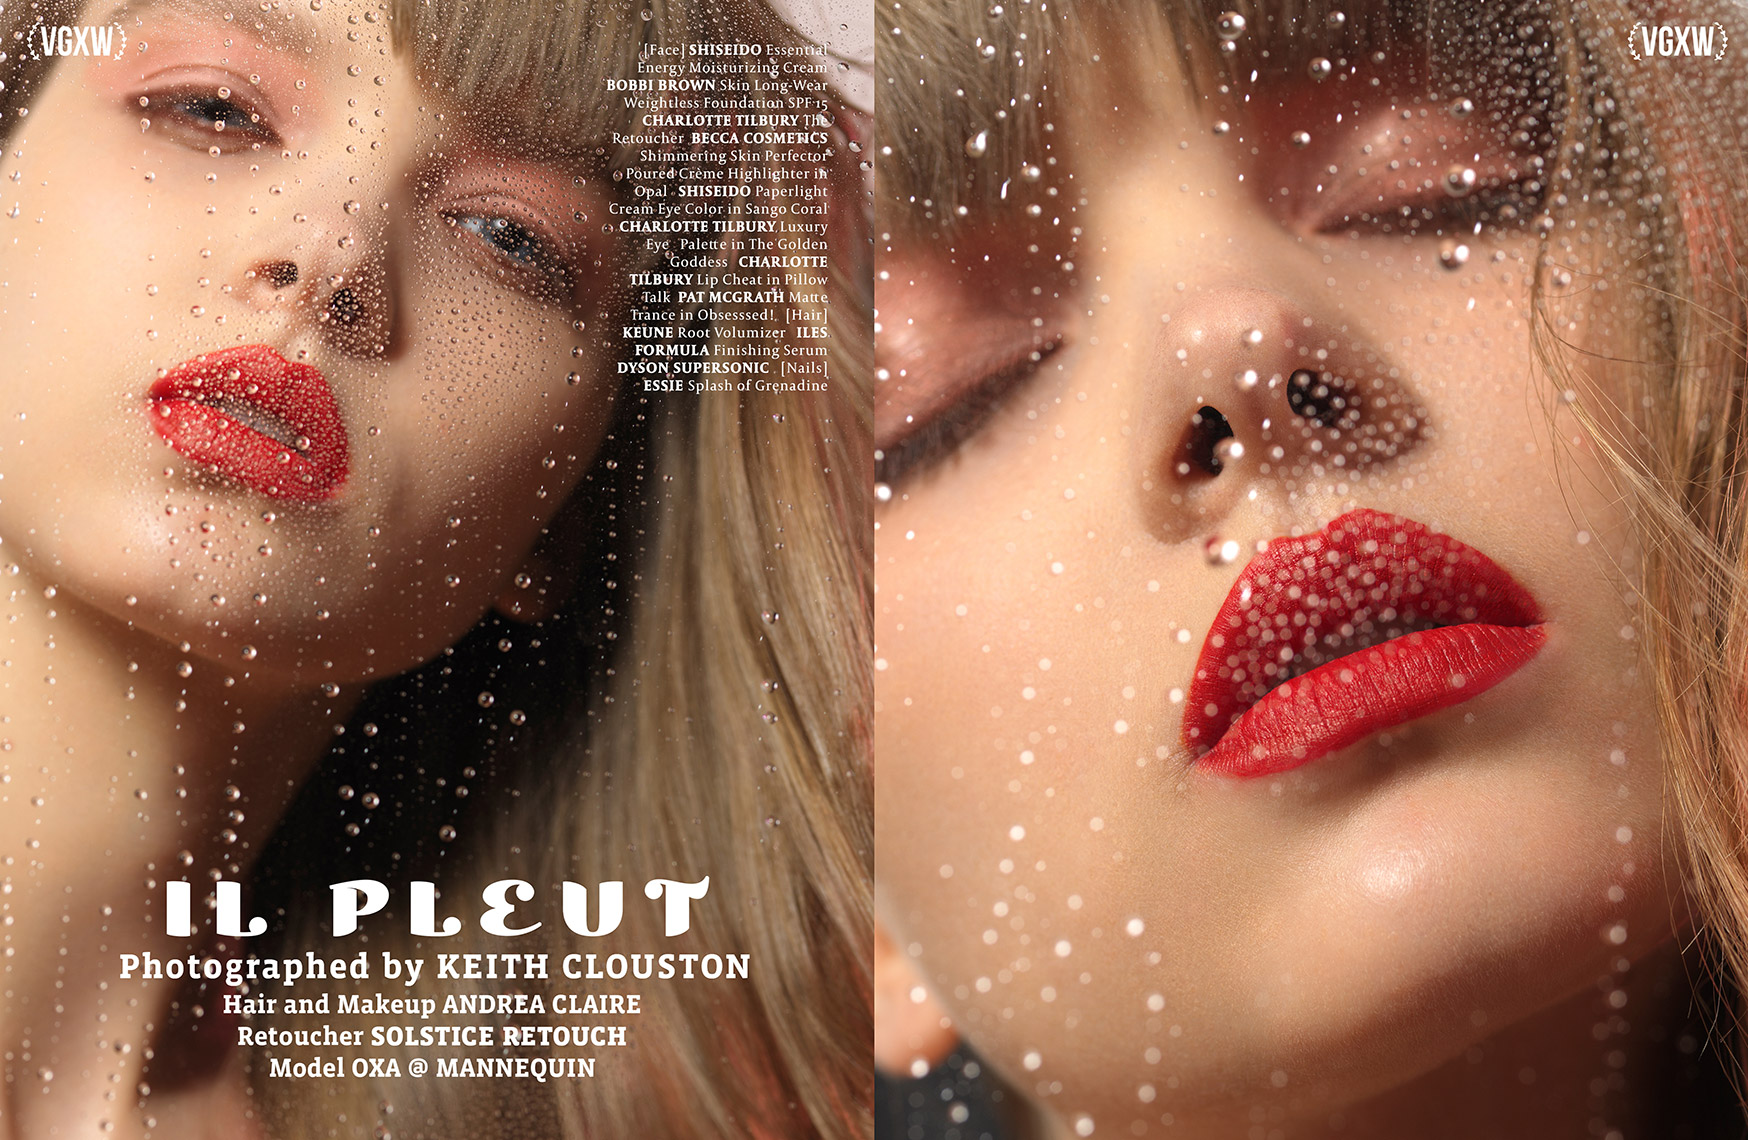 06-180405-Il-Pleut---Virtuogenix-Magazine_1